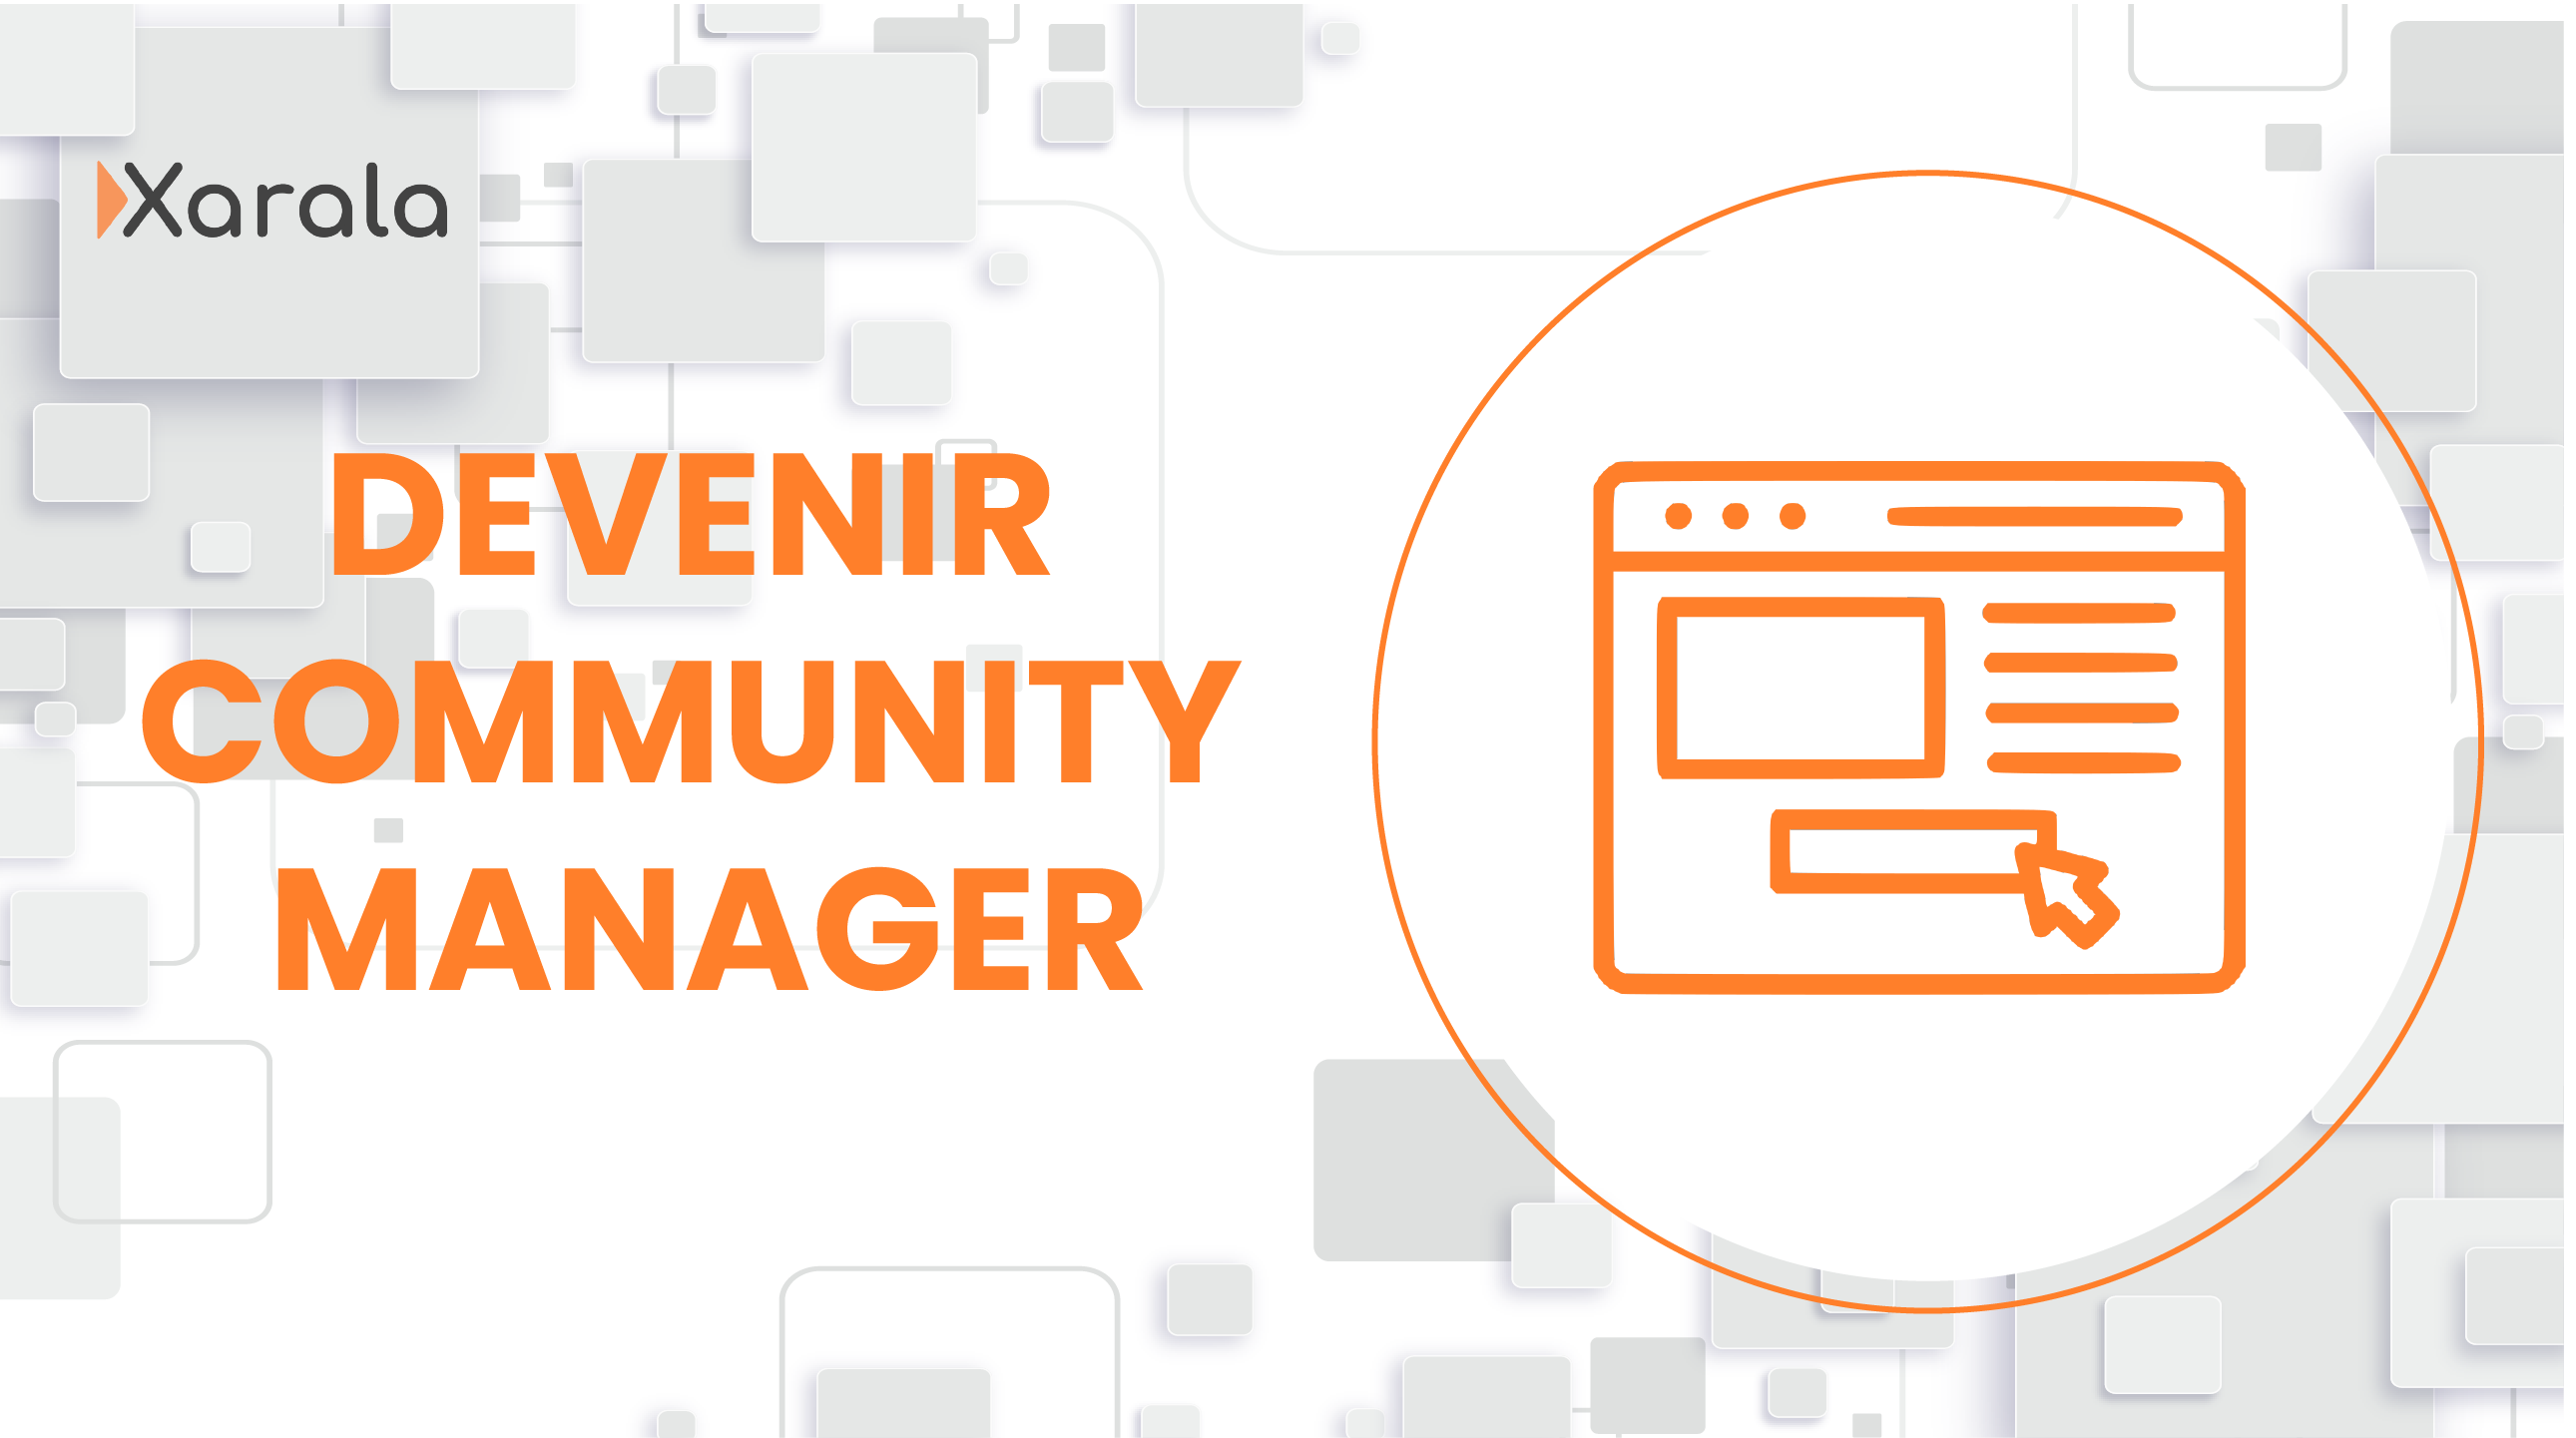 Devenir community Manager